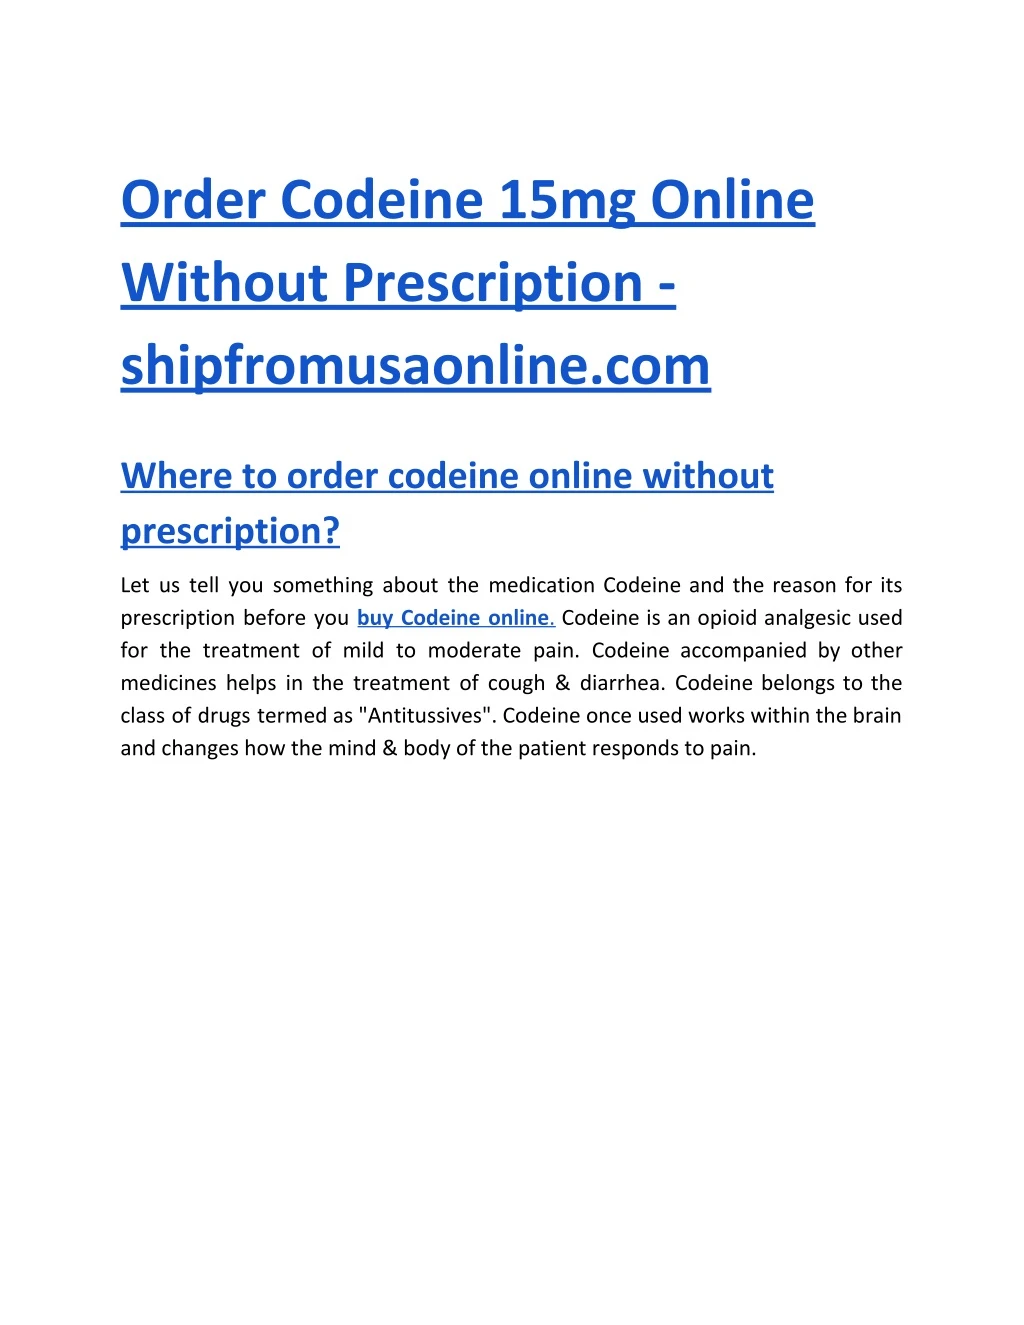 order codeine 15mg online without prescription